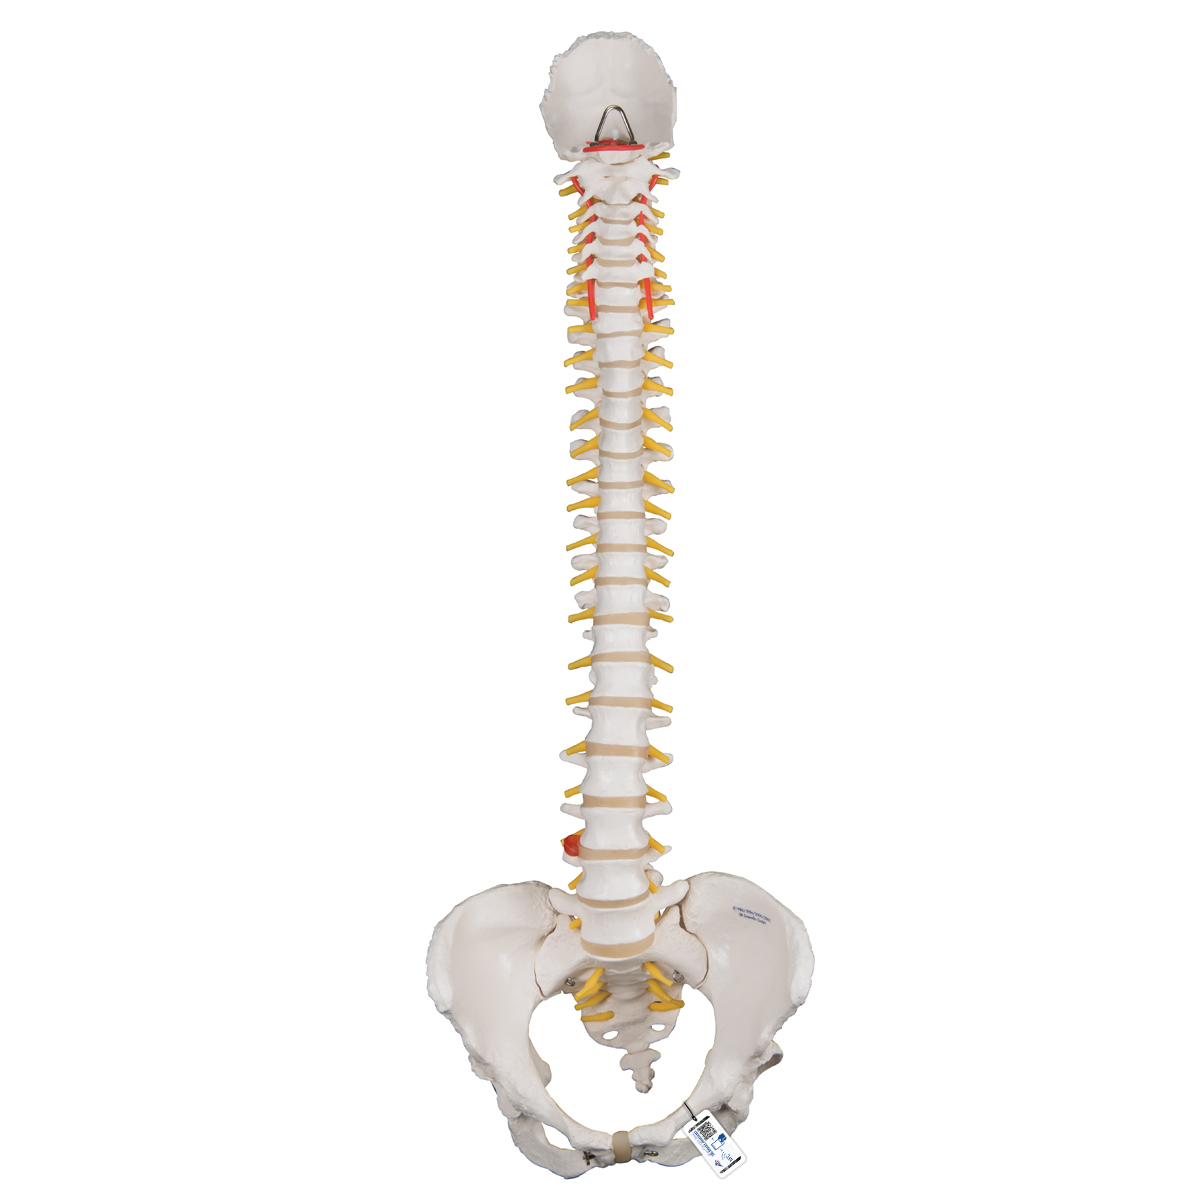 Chiropractic Spine Model